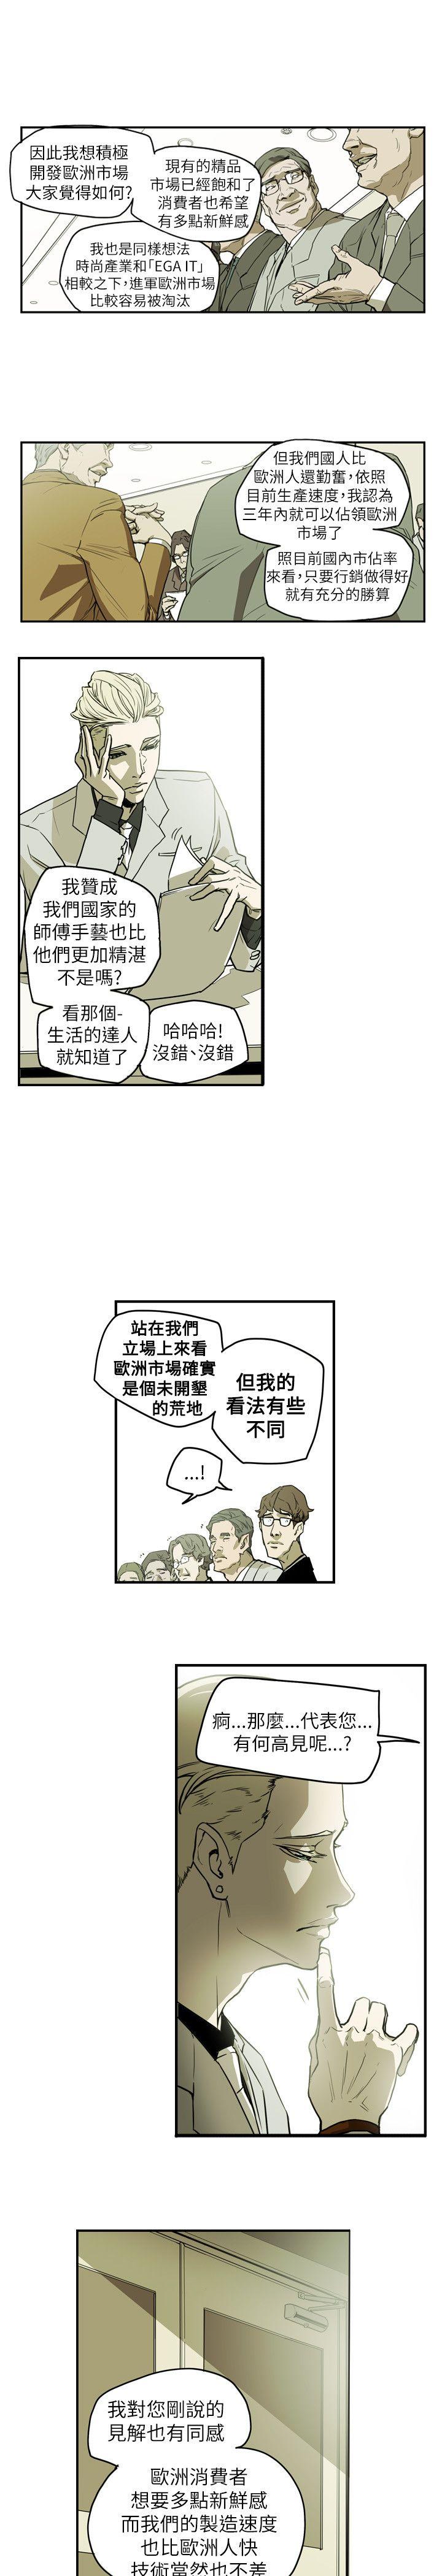 Honey trap 甜蜜陷阱  第45话 漫画图片4.jpg